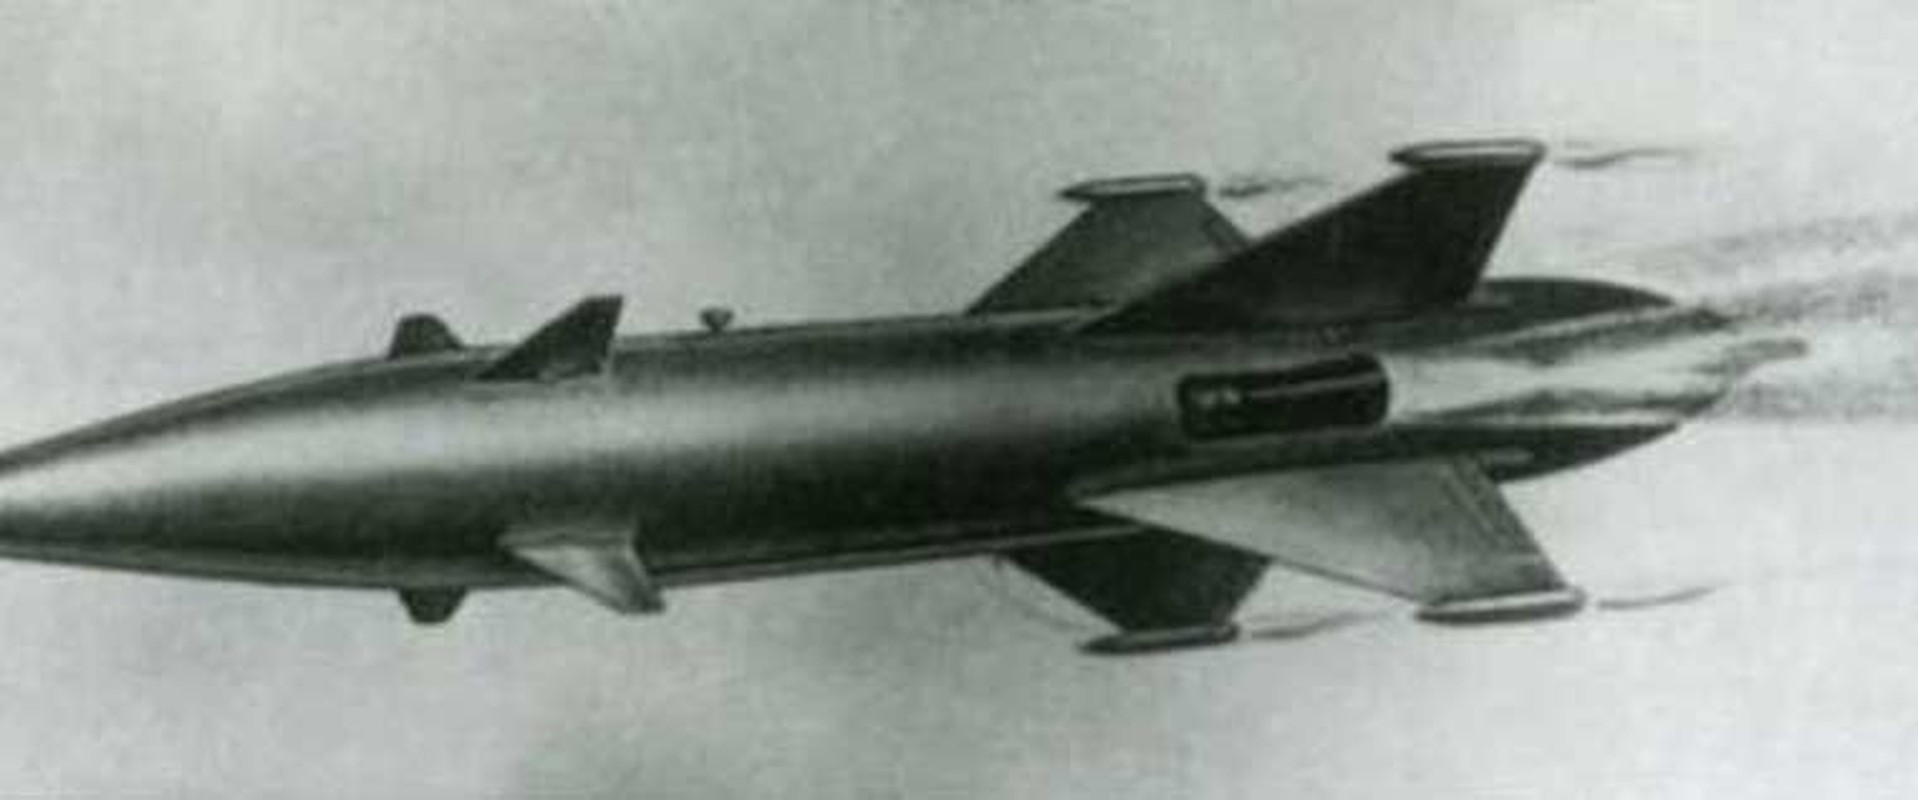 Kham pha ten lua “la” tren tiem kich MiG-21 Viet Nam-Hinh-2